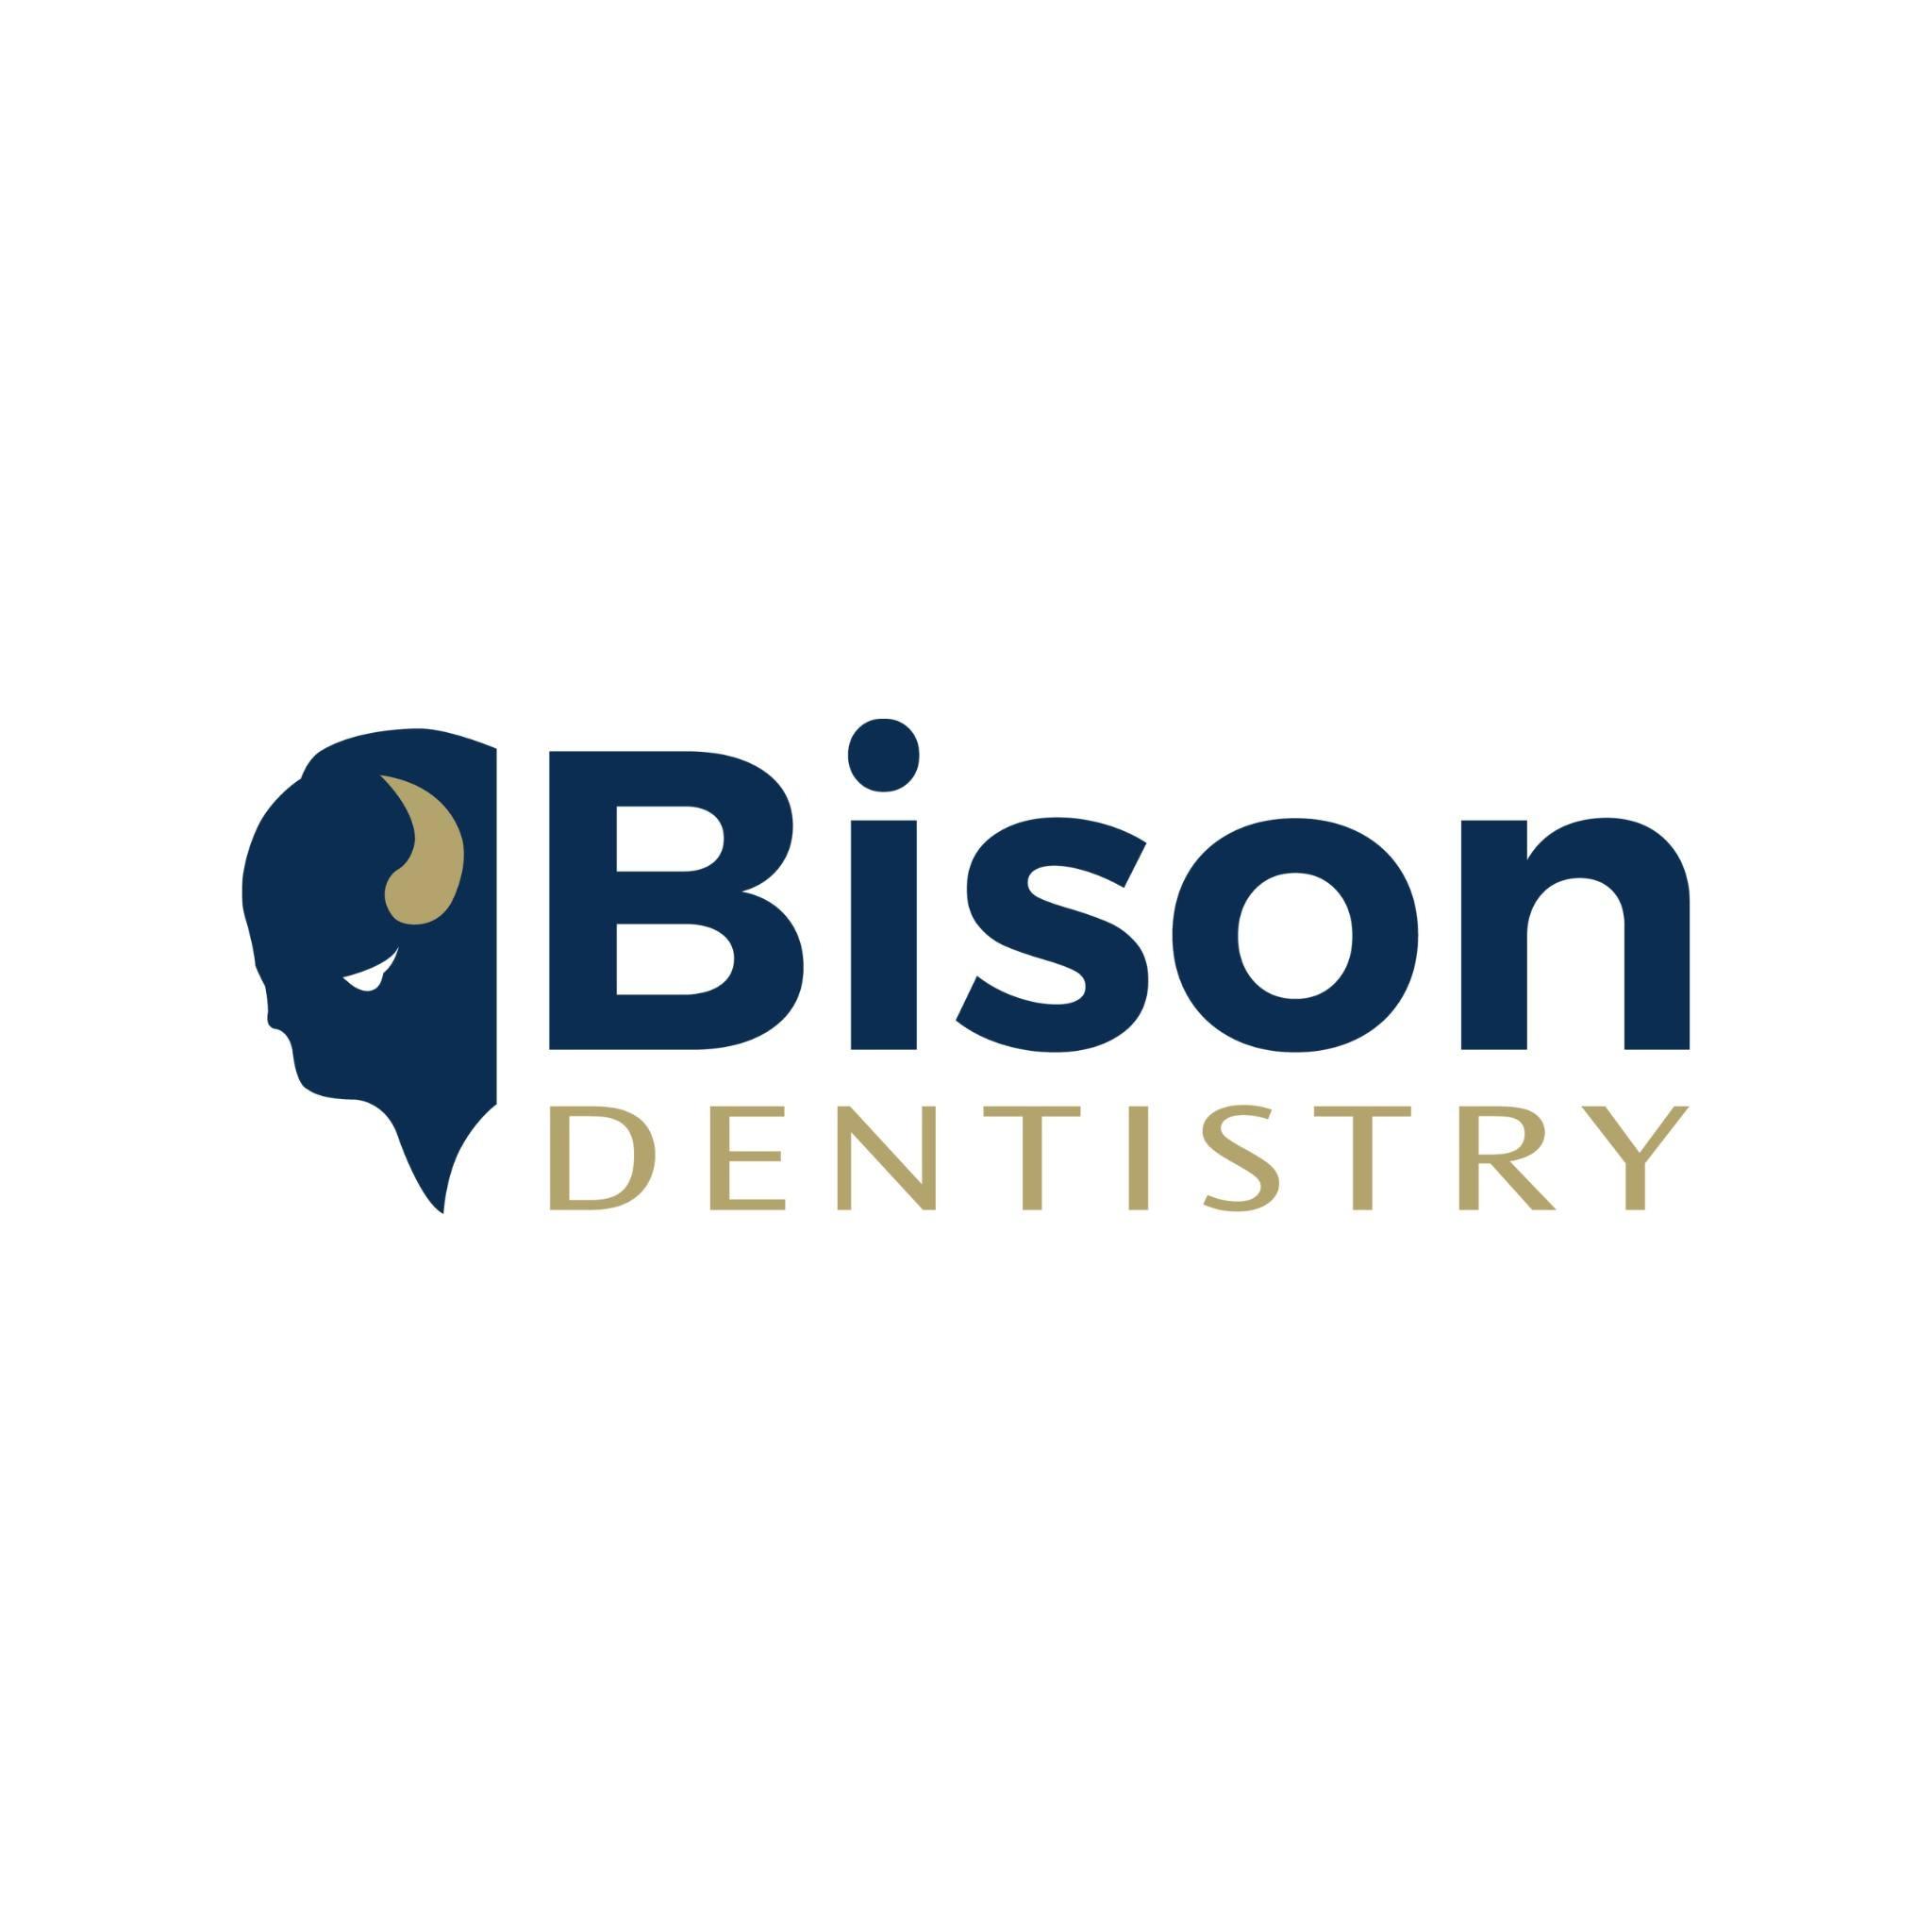 Bison Dentistry - Tonawanda, NY 14150 - (716)696-1951 | ShowMeLocal.com